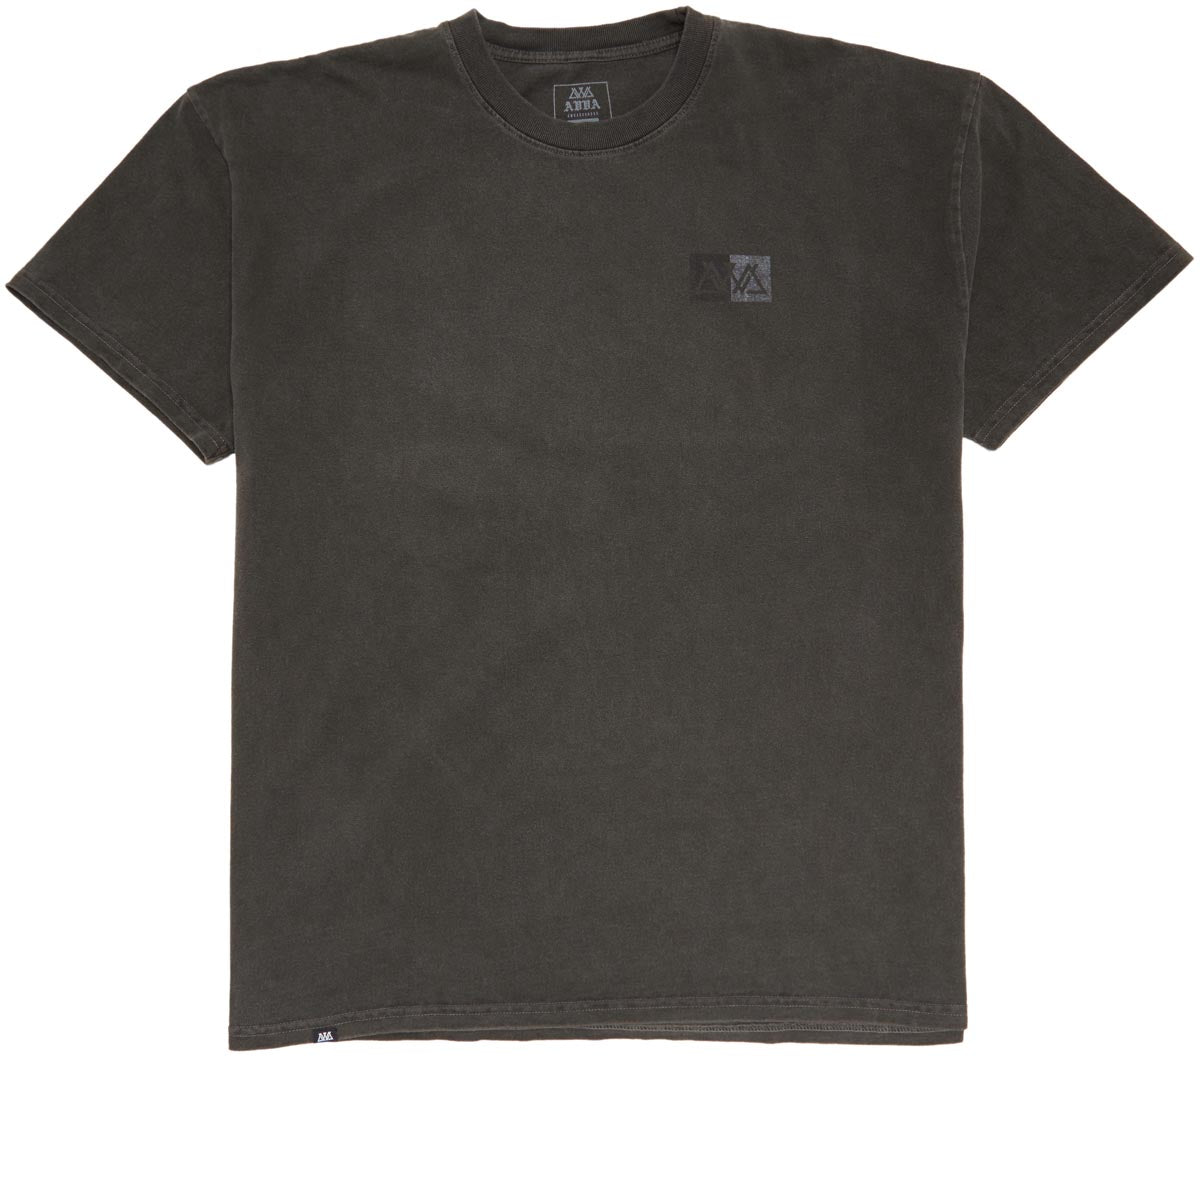 AVVA Pro Box Logo T-Shirt - Charcoal Grey image 1